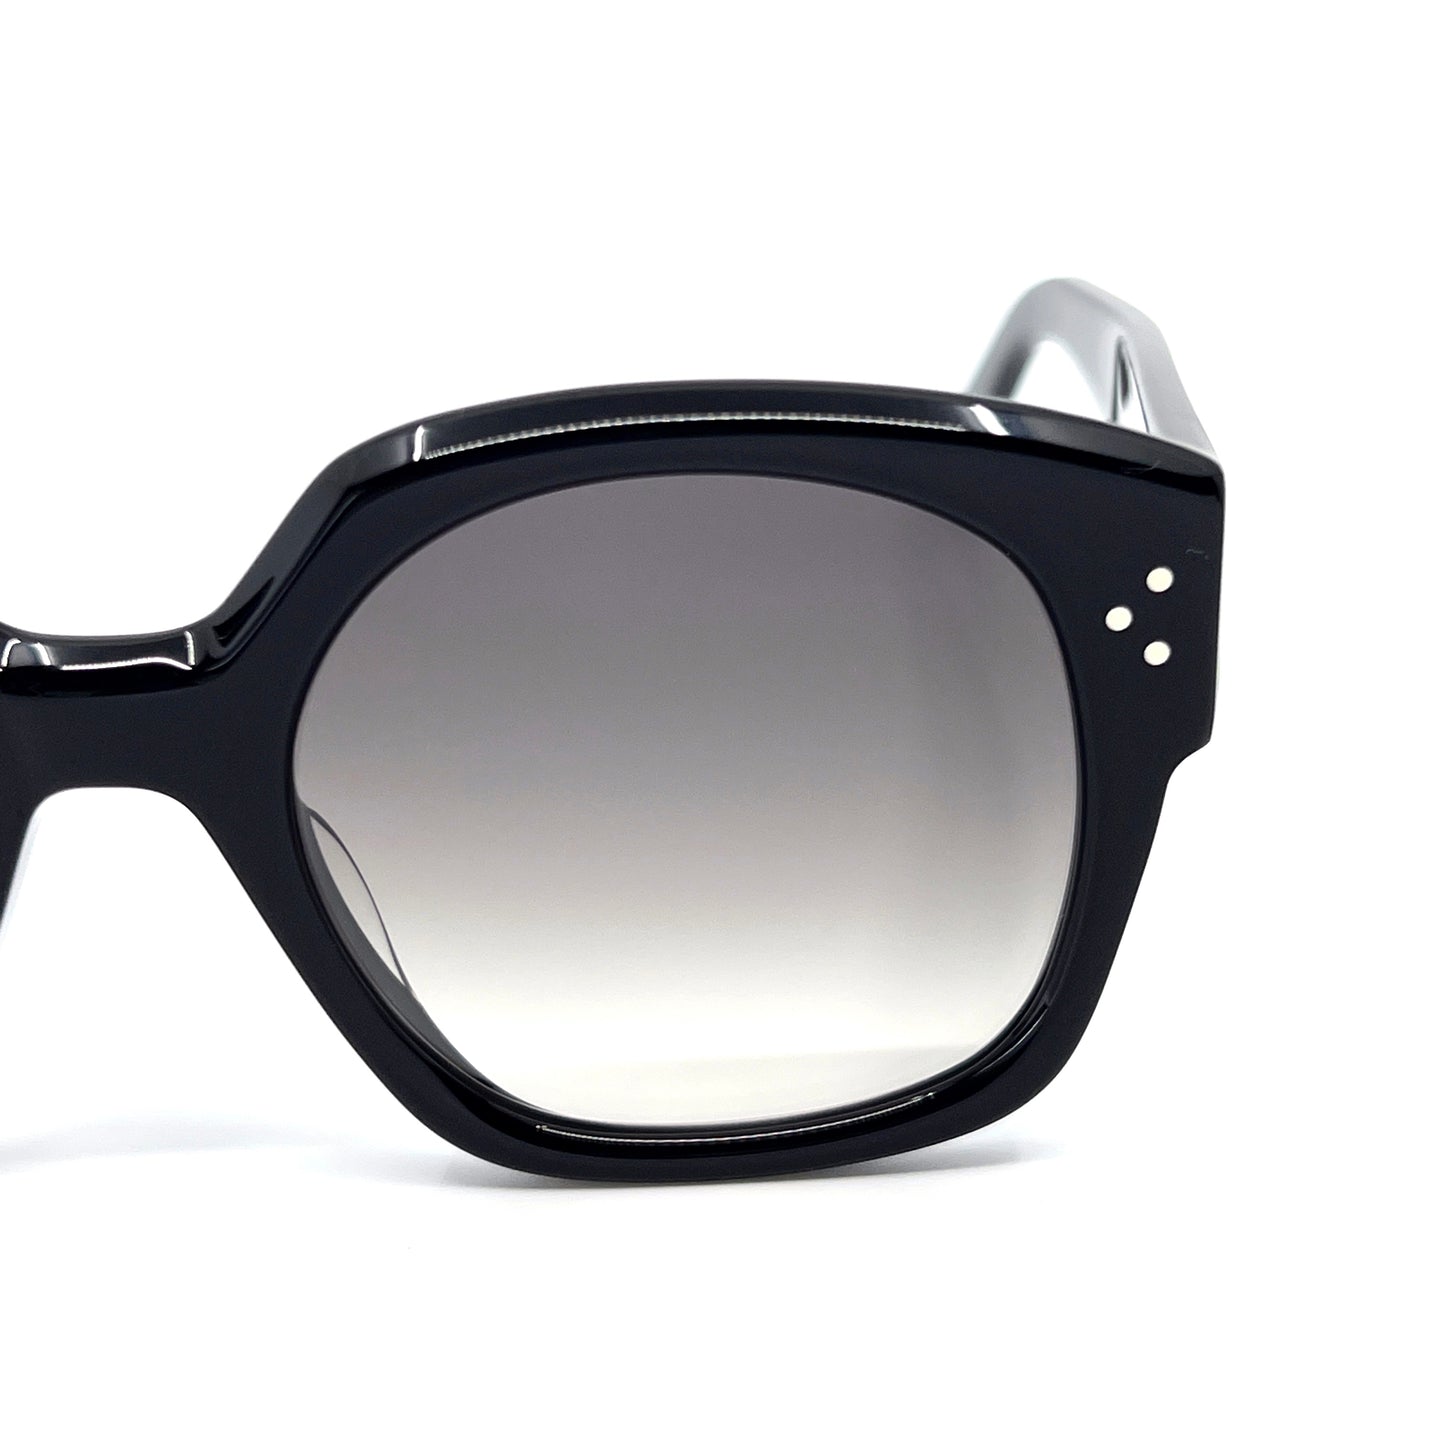 CELINE Sunglasses CL40168F 01F